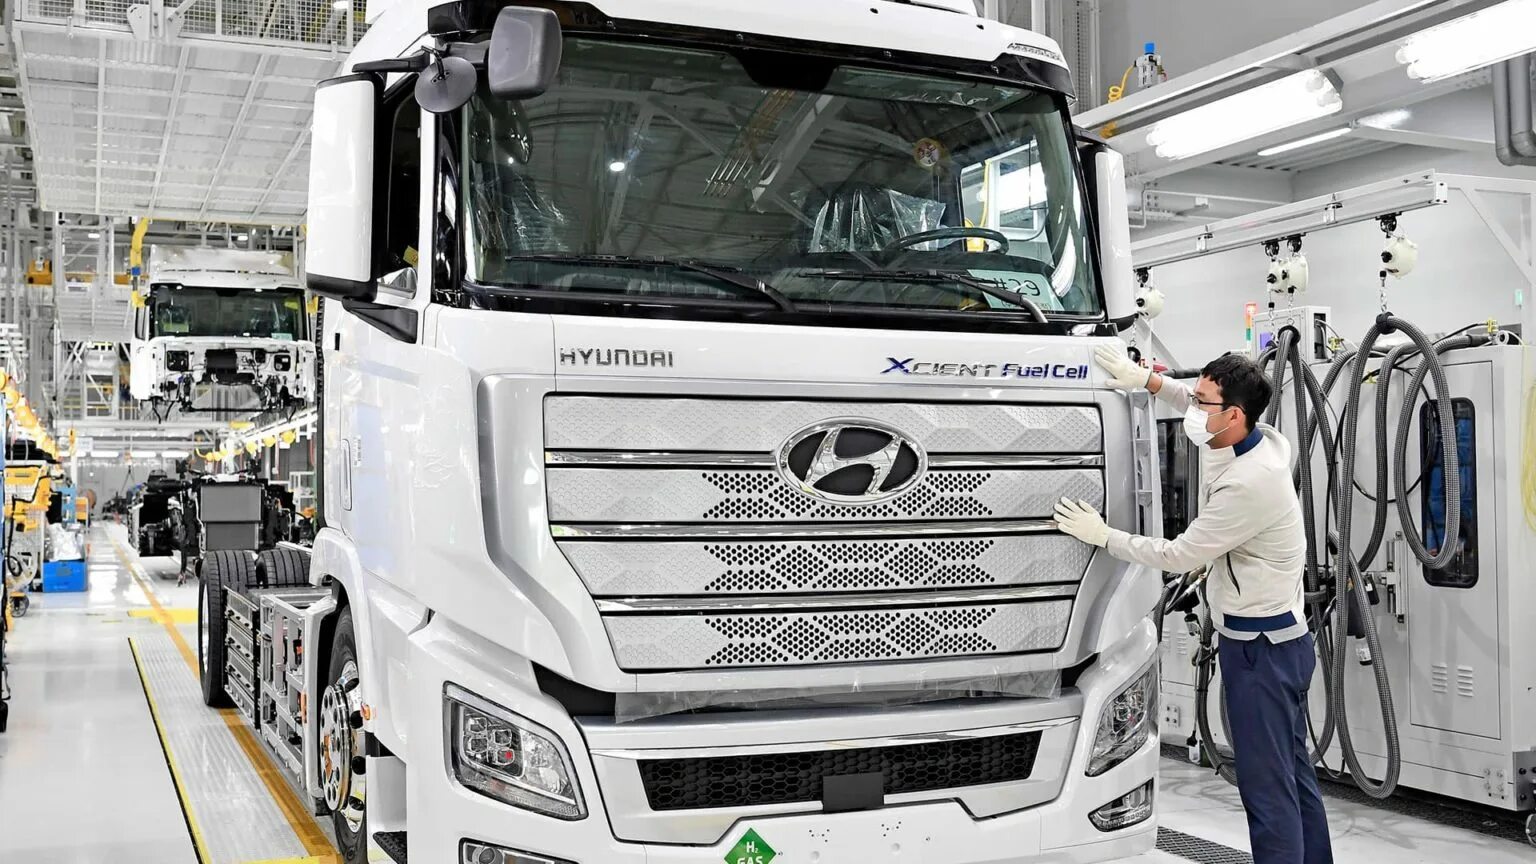 Хундай грузовик. Hyundai Xcient Truck. Hyundai Xcient fuel Cell. Hyundai Xcient фура. Тягач Hyundai 2020.